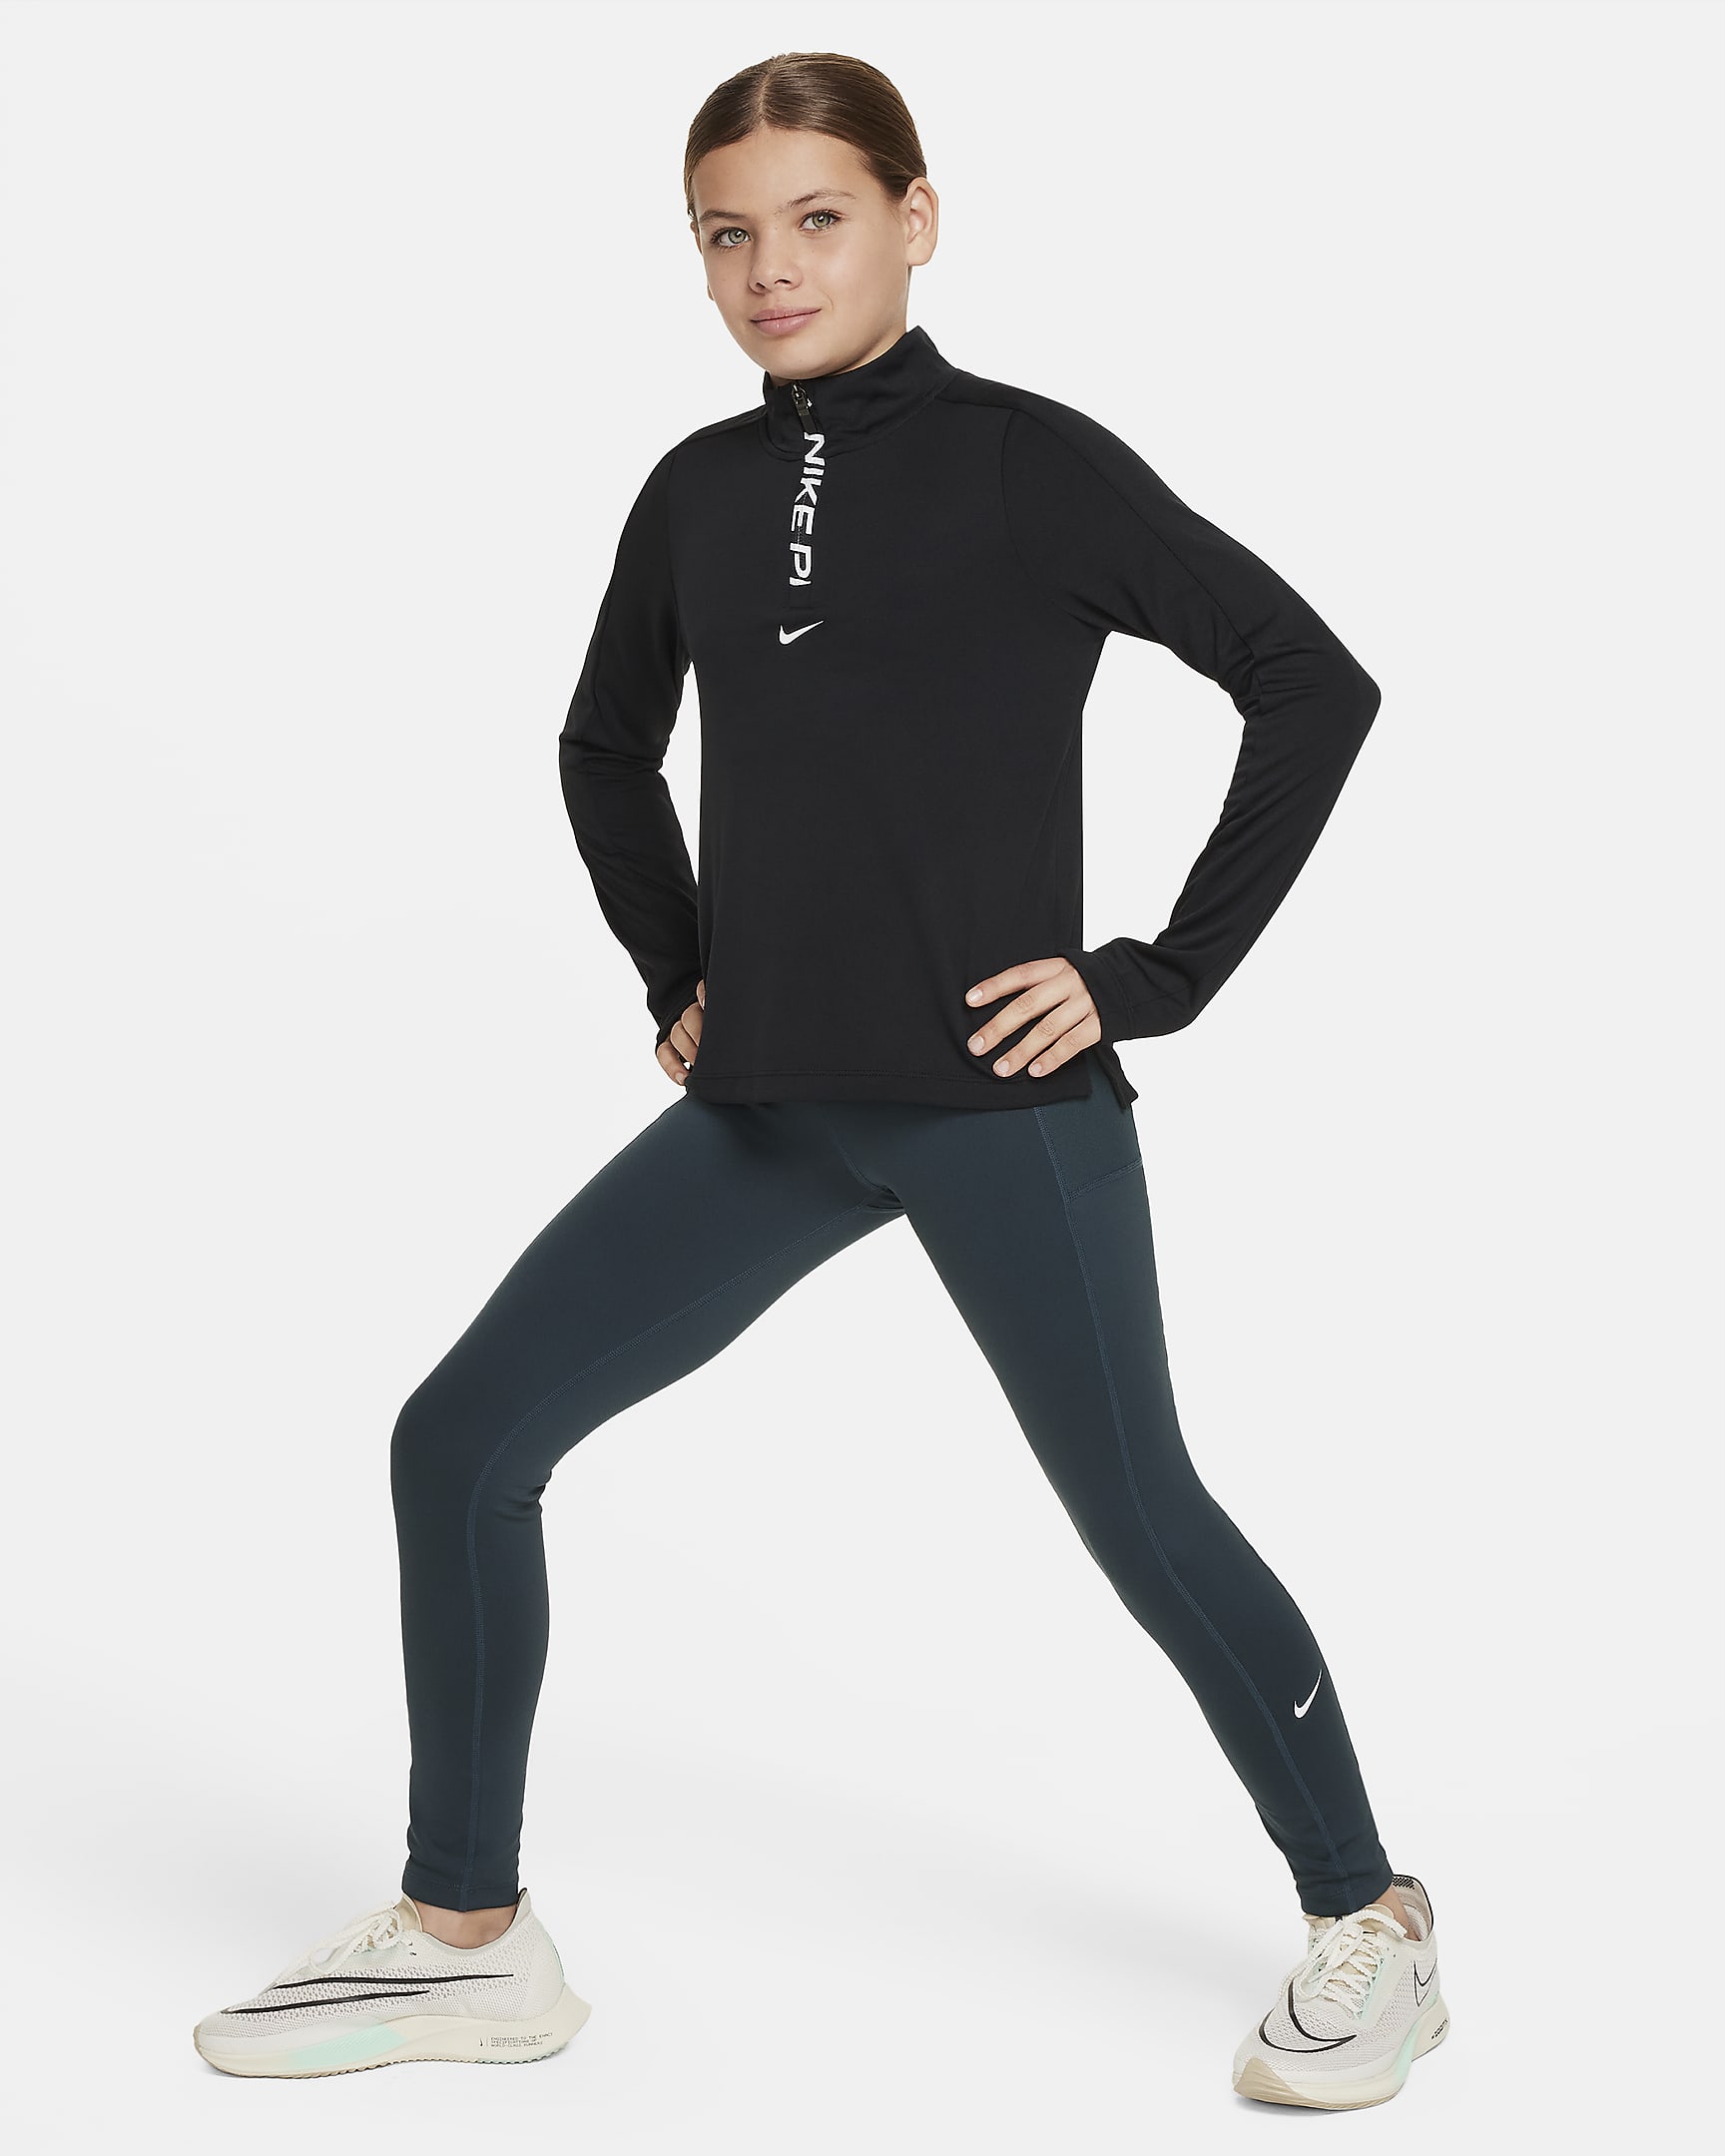 Nike Pro Girls' Dri-FIT Long-Sleeve 1/2-Zip Top - Black/White